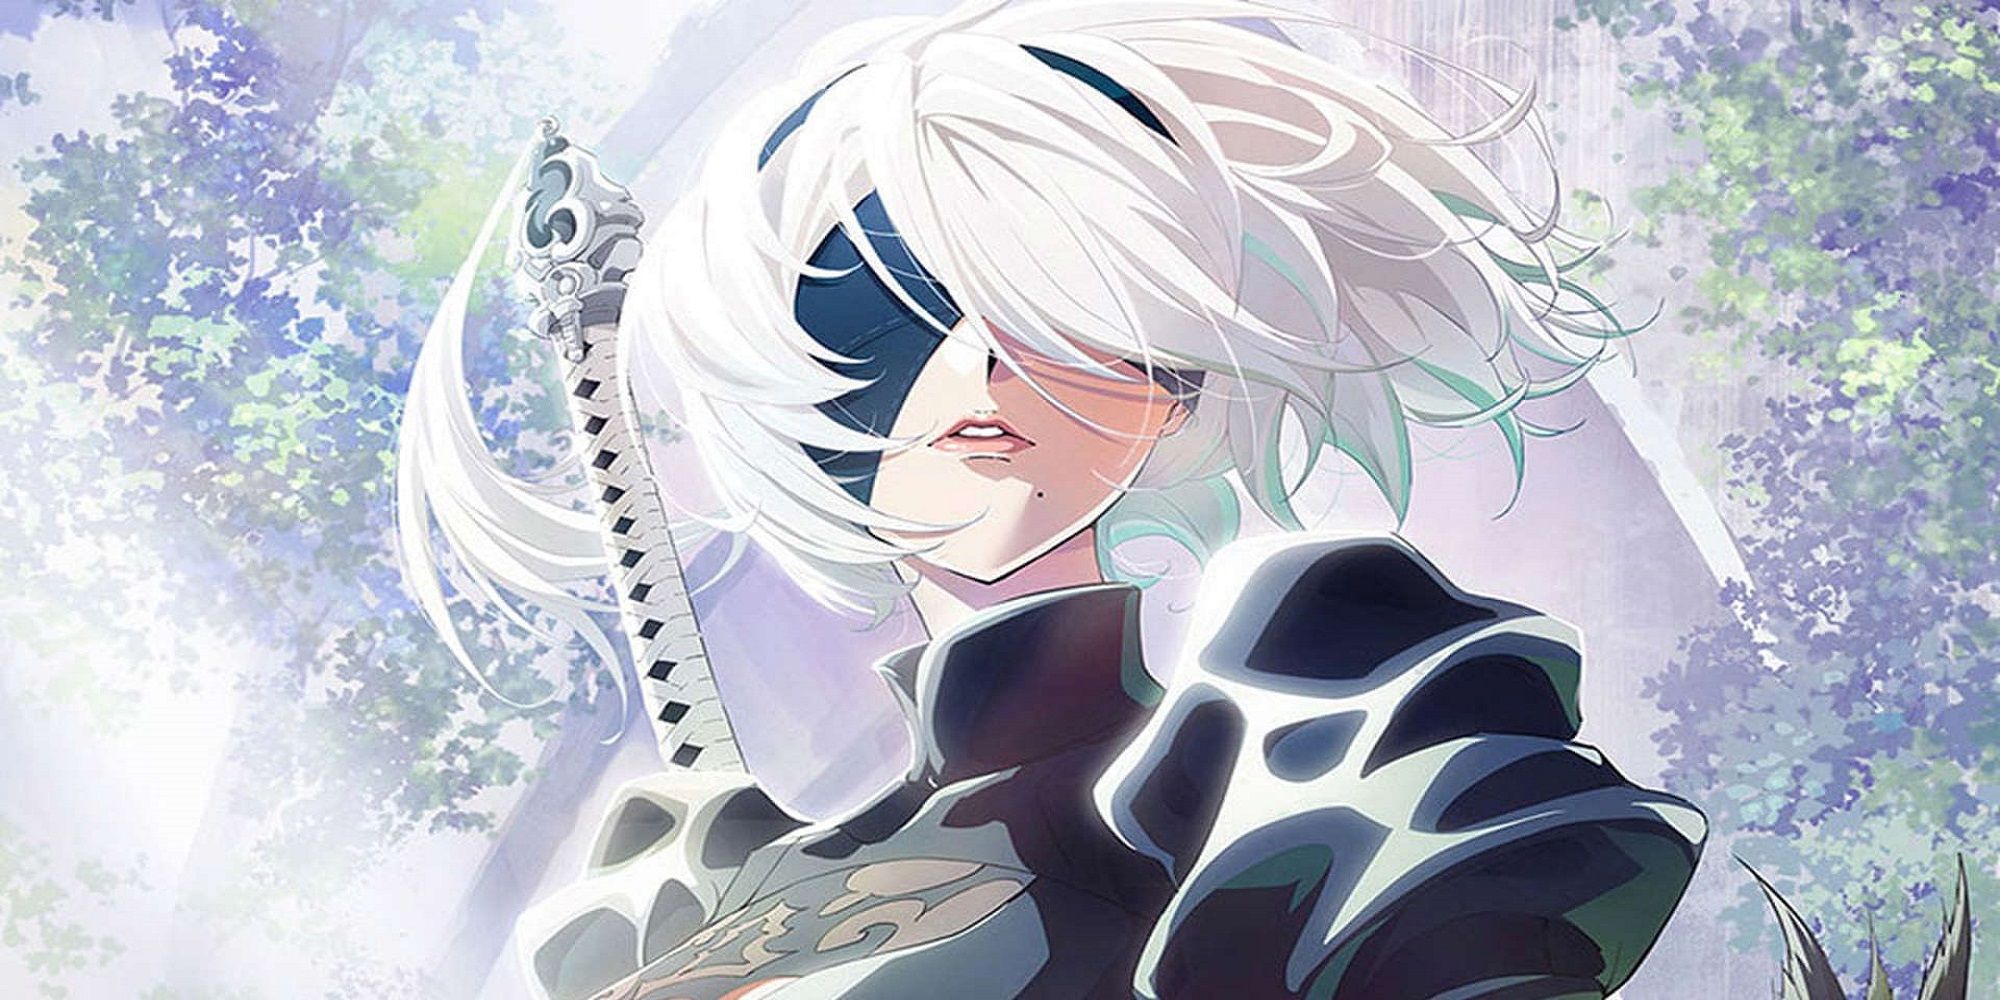 NieR: Automata Anime Hiatus Ends Next Month, Release Date Set